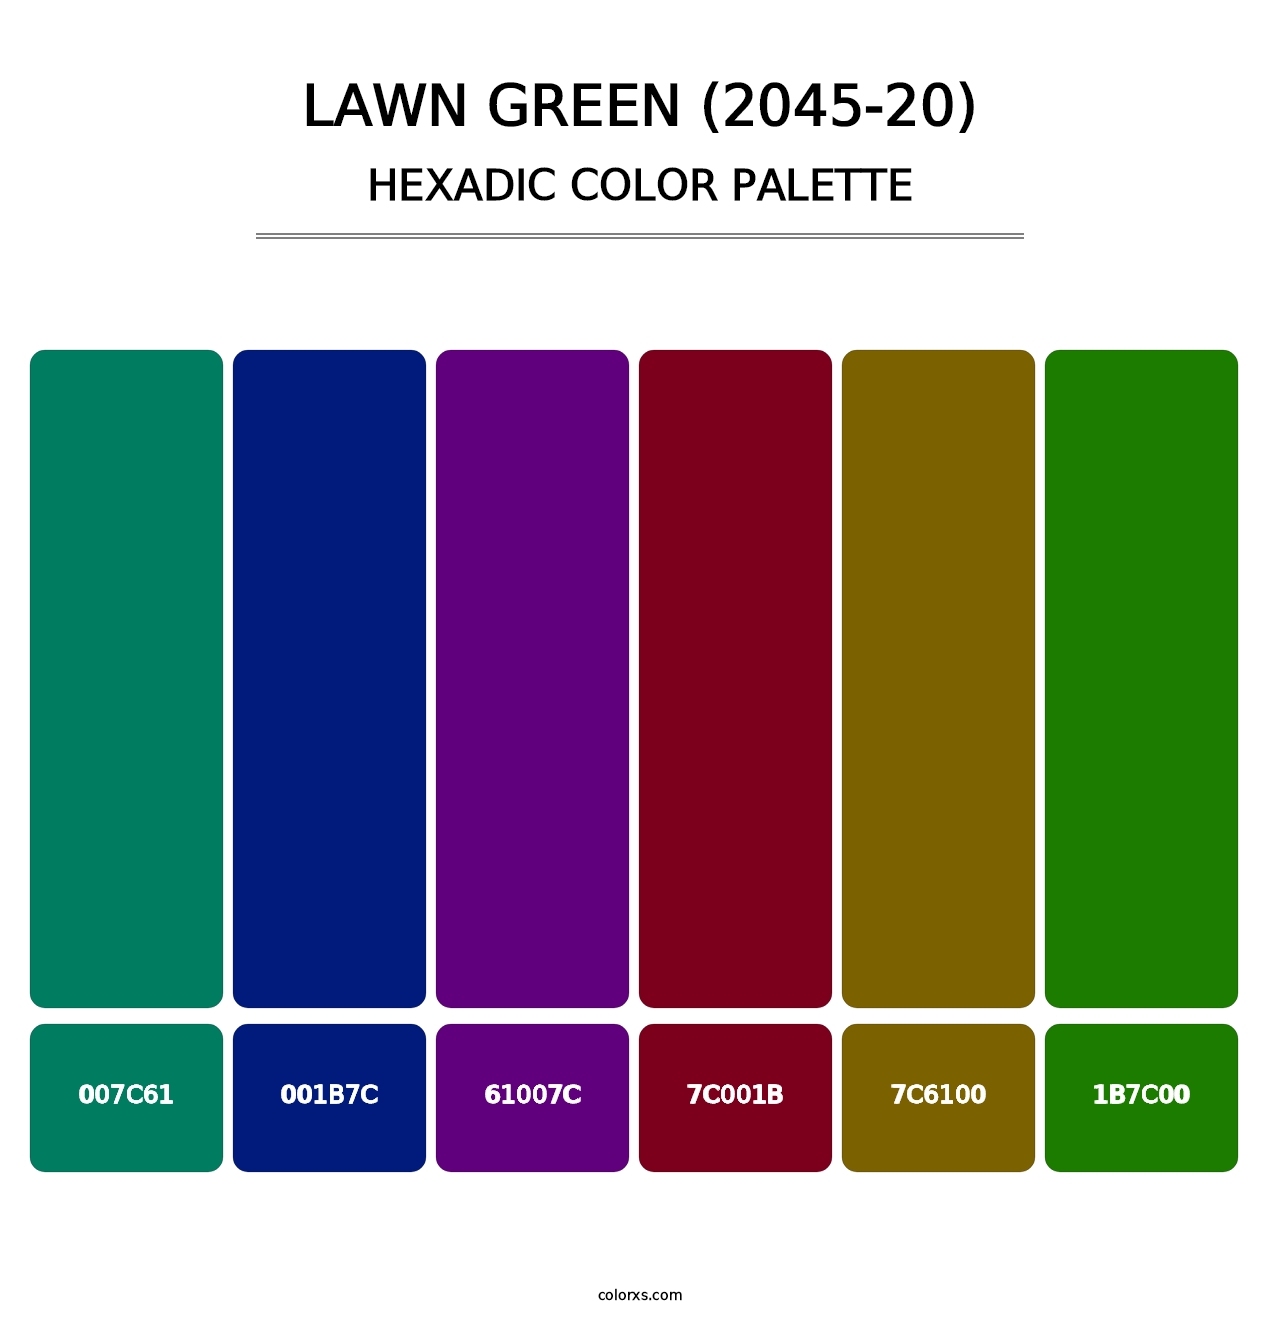 Lawn Green (2045-20) - Hexadic Color Palette